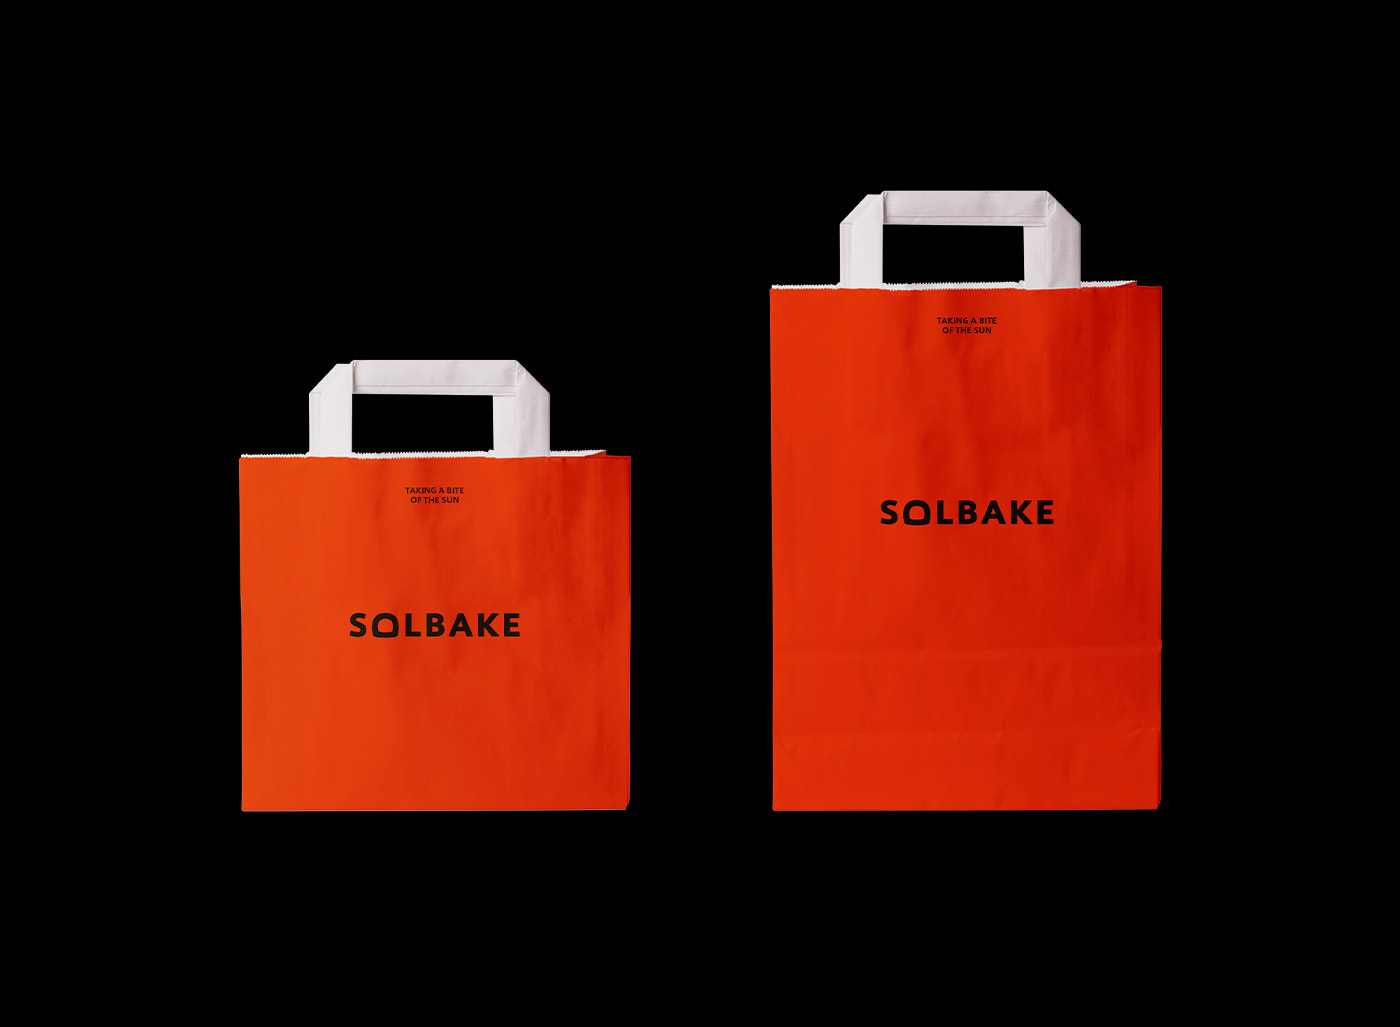 SOLBAKE 烘焙店品牌形象设计